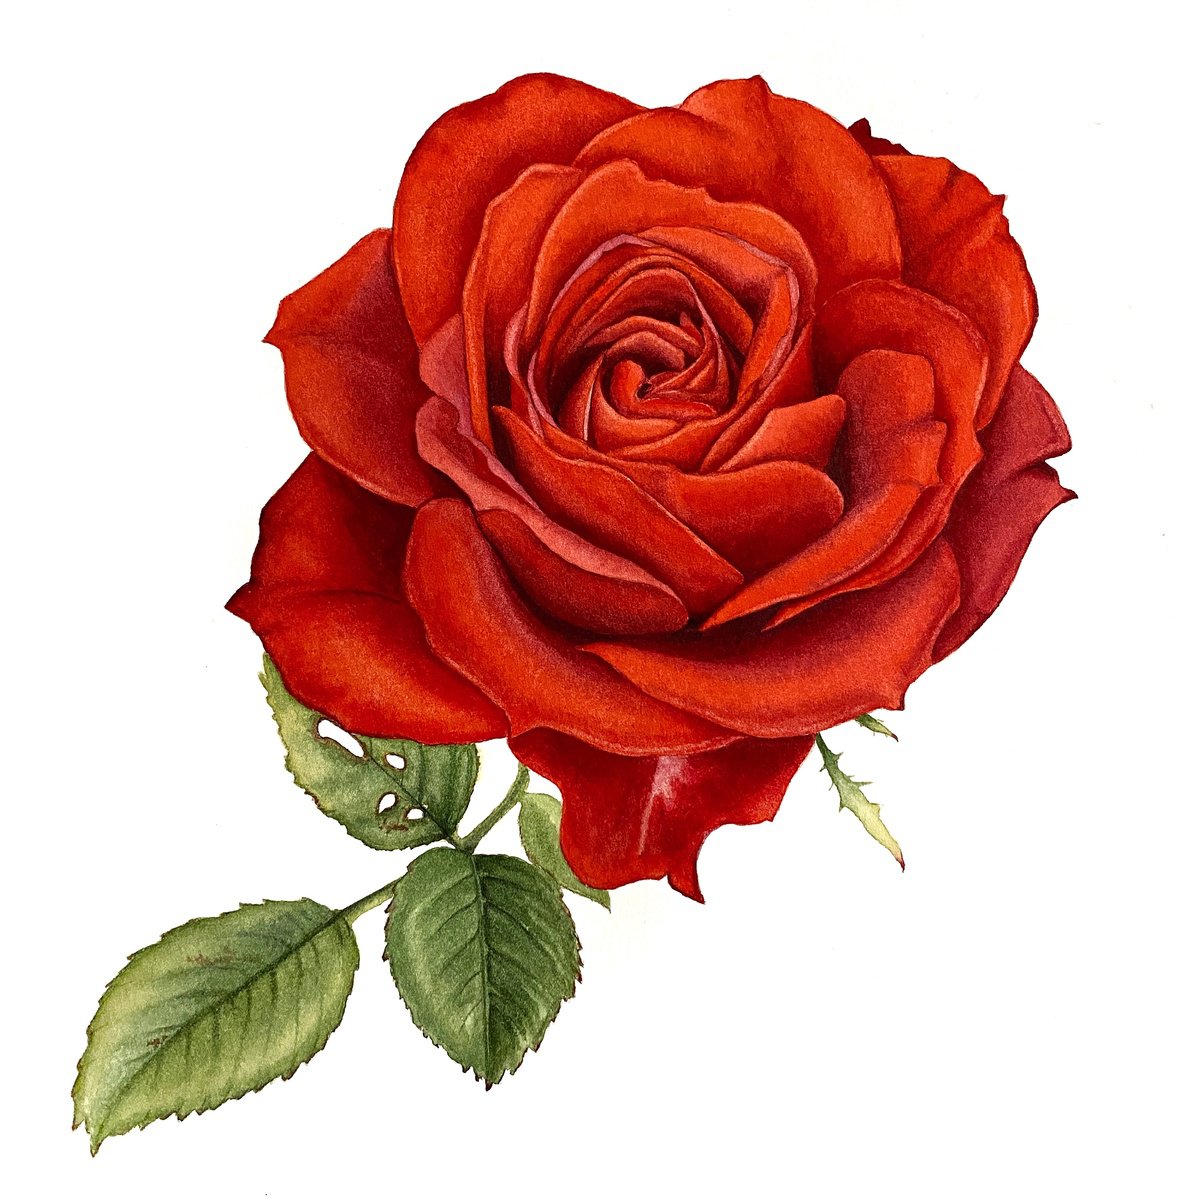 Red rose by Tina Shyfruk